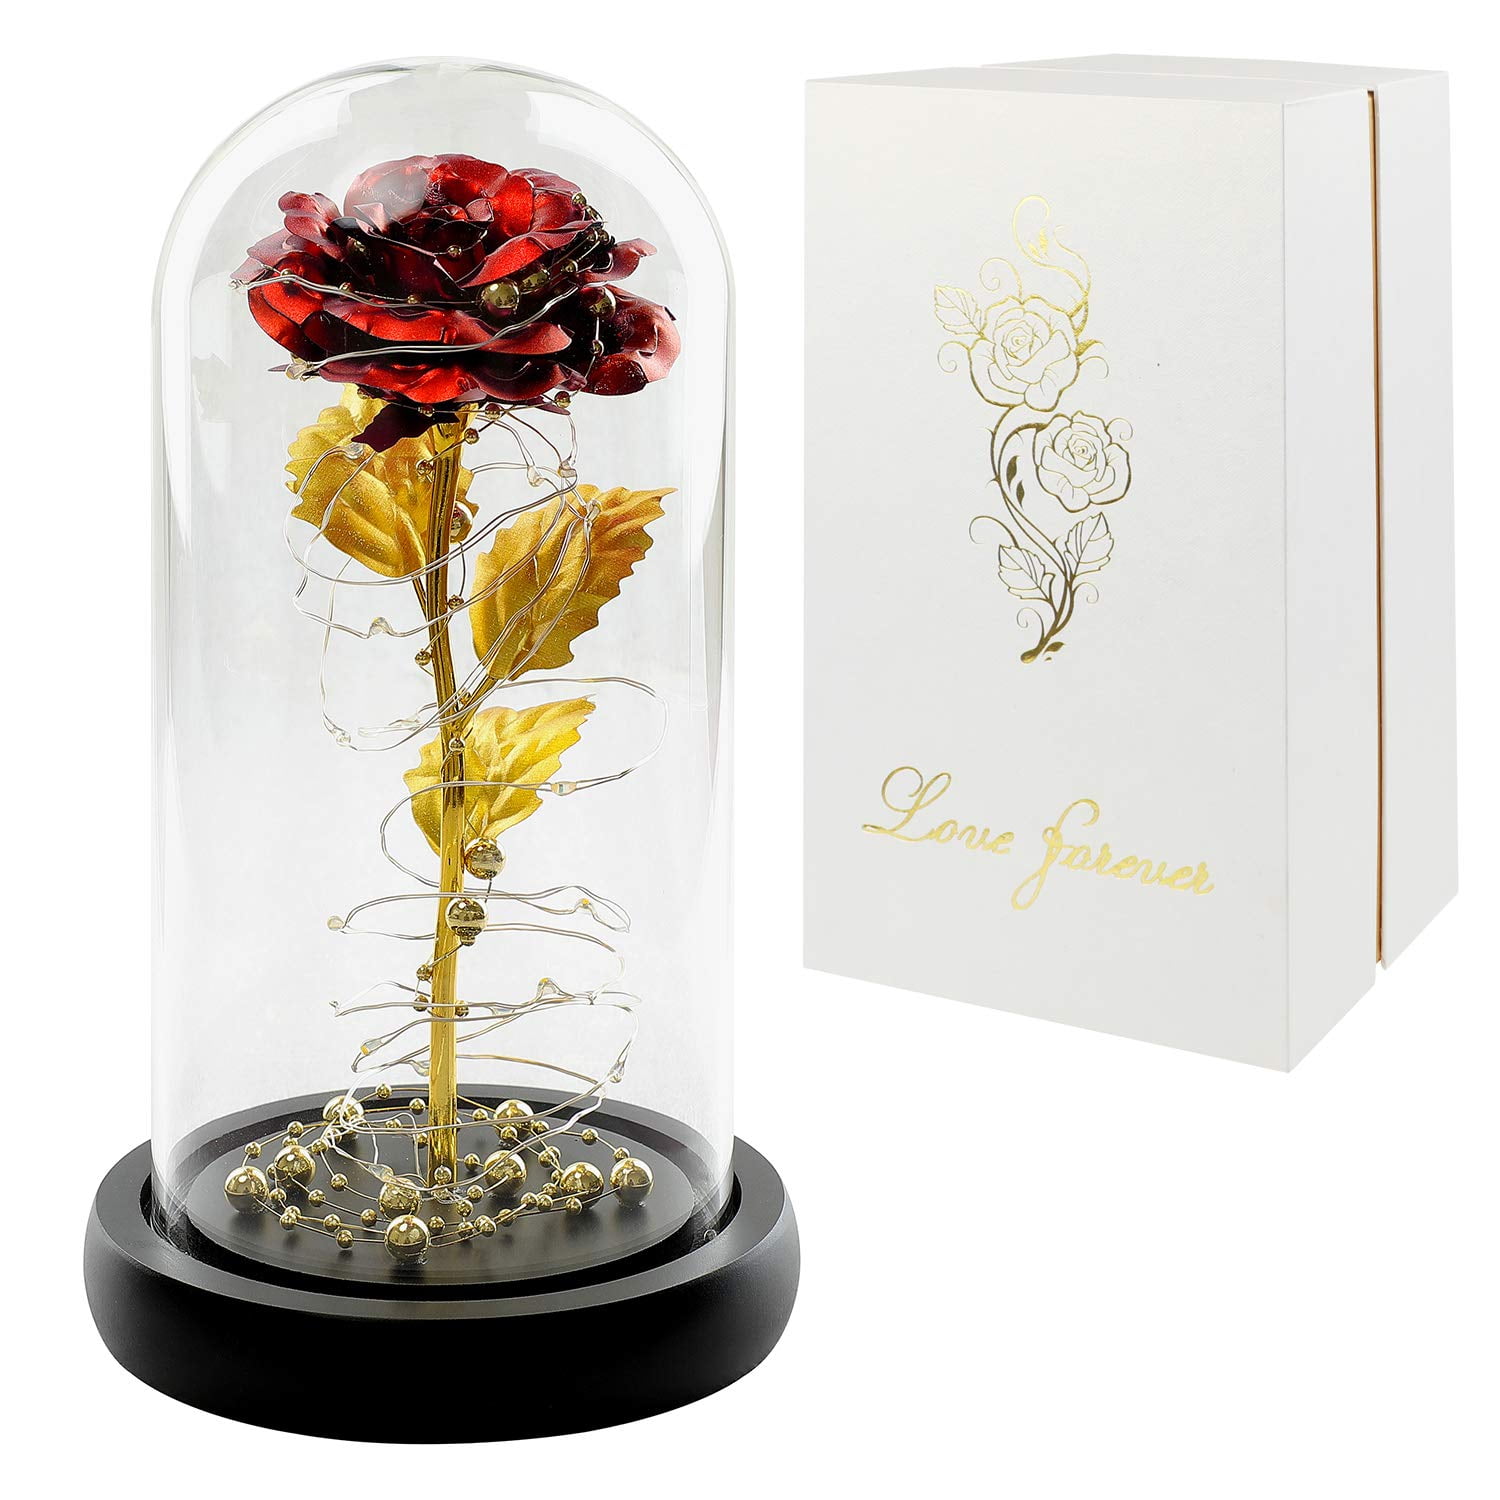 Eterfield Preserved Real Rose Handmade Eternal Rose in Glass Doom Gift for Her 